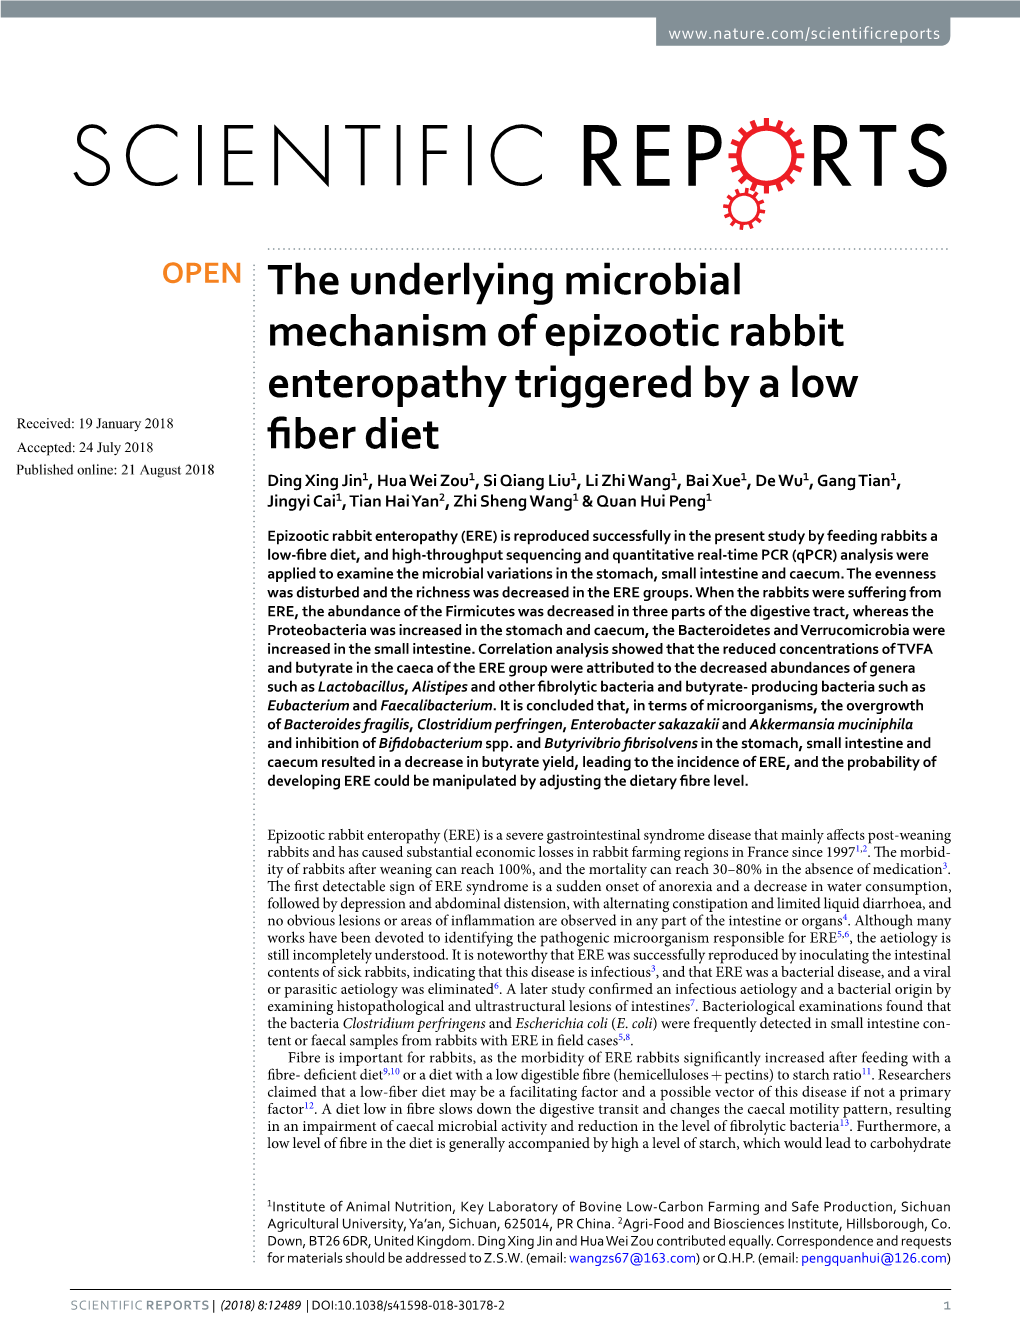 The Underlying Microbial Mechanism of Epizootic Rabbit Enteropathy